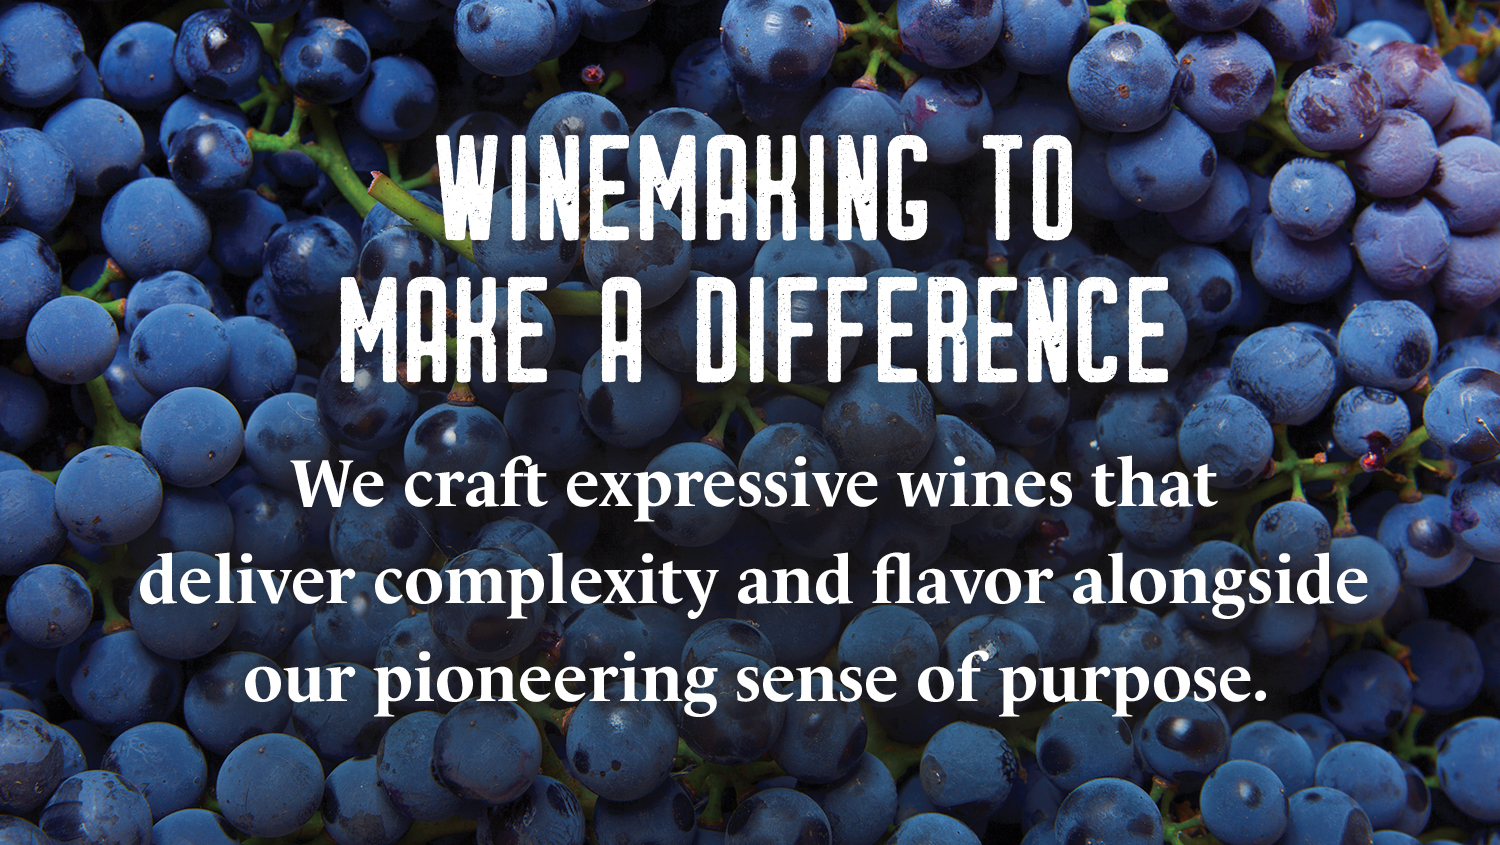 Wine Grounded in Good: Fetzer Vineyards Details Its Regenerative Development Progress